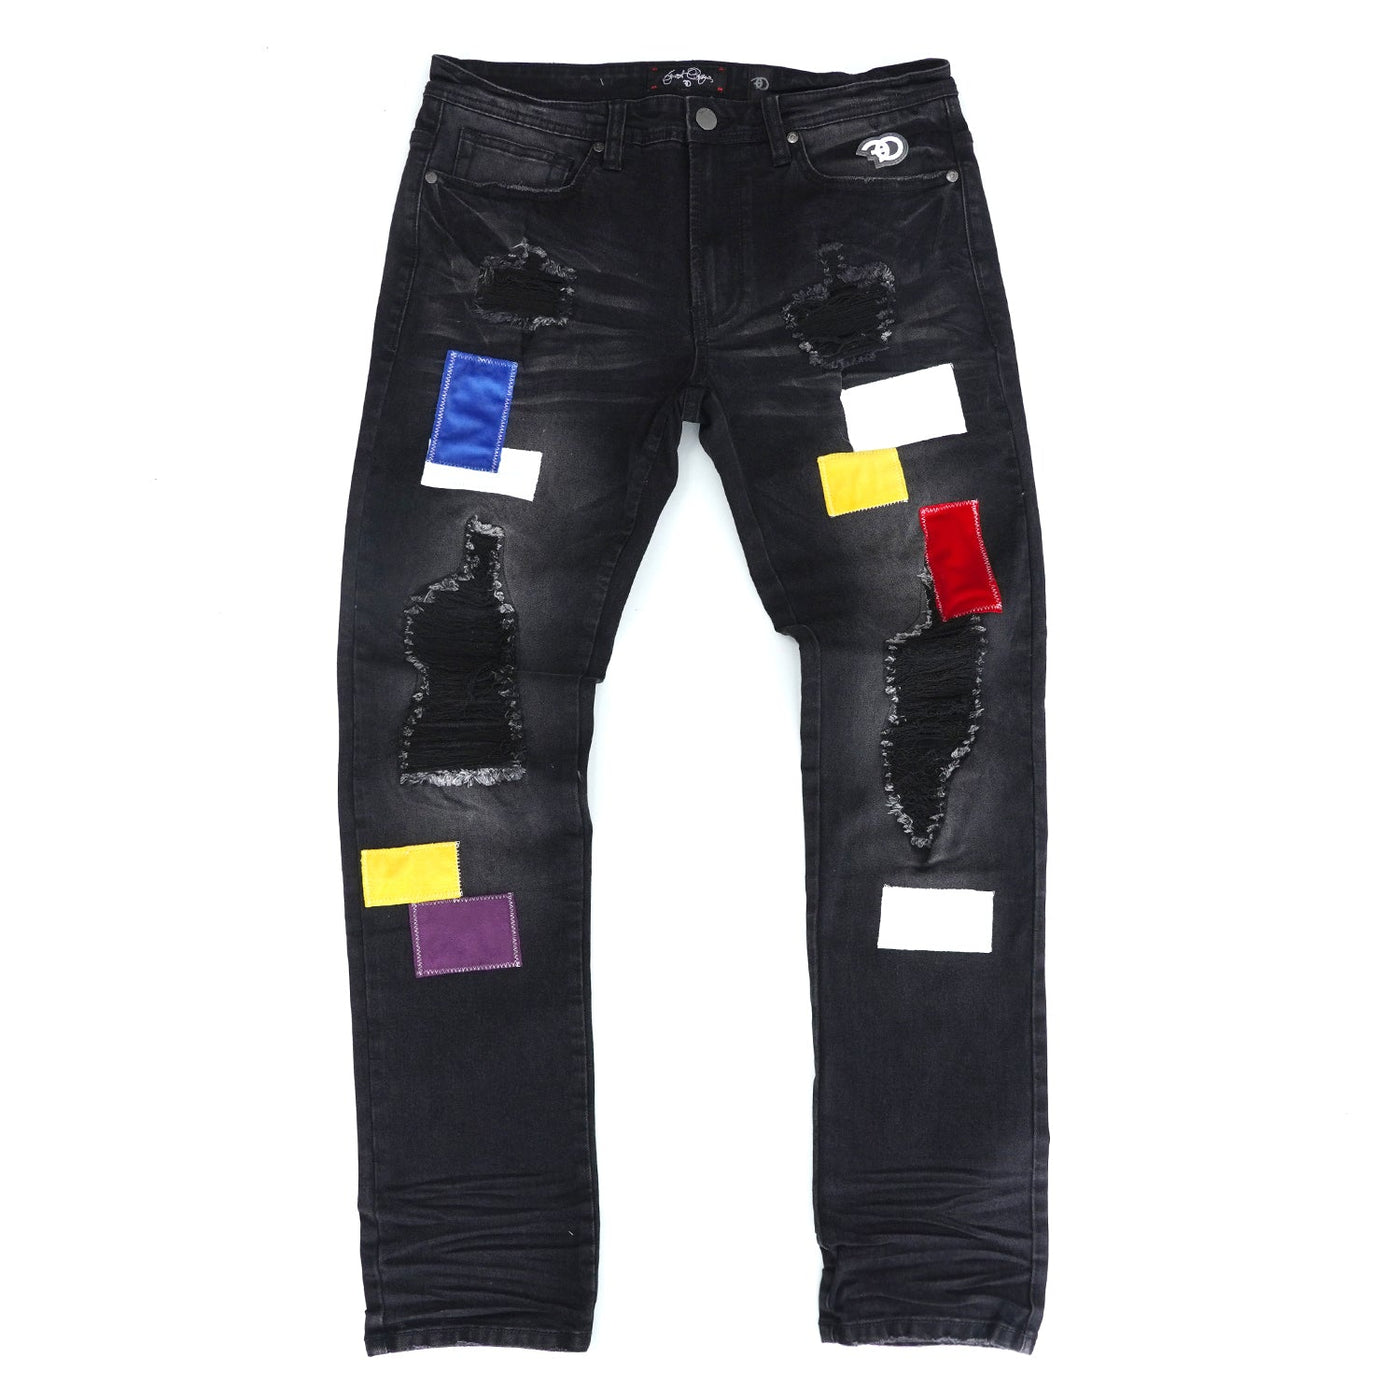 F1715 Frost Patchwork Jenim Shredded Jeans - Black Wash